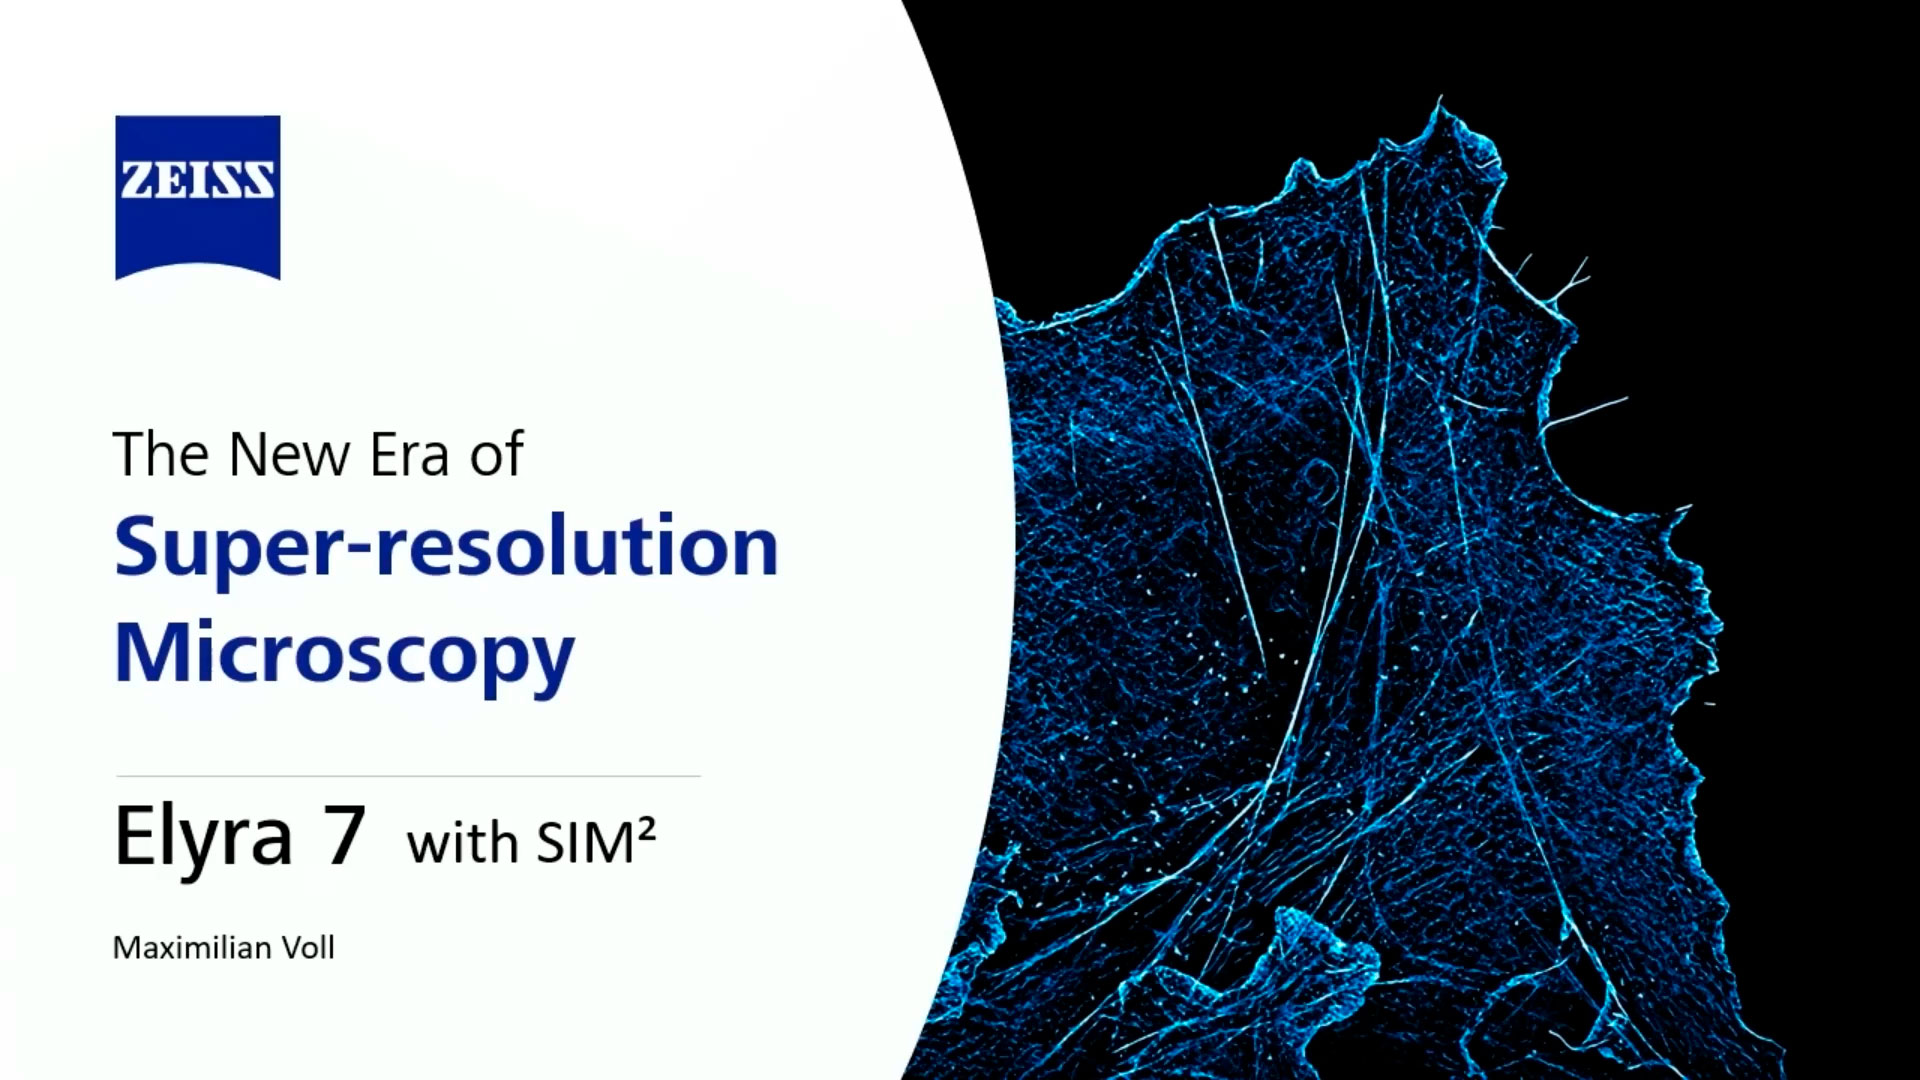 The New Era of Super-resolution Microscopy